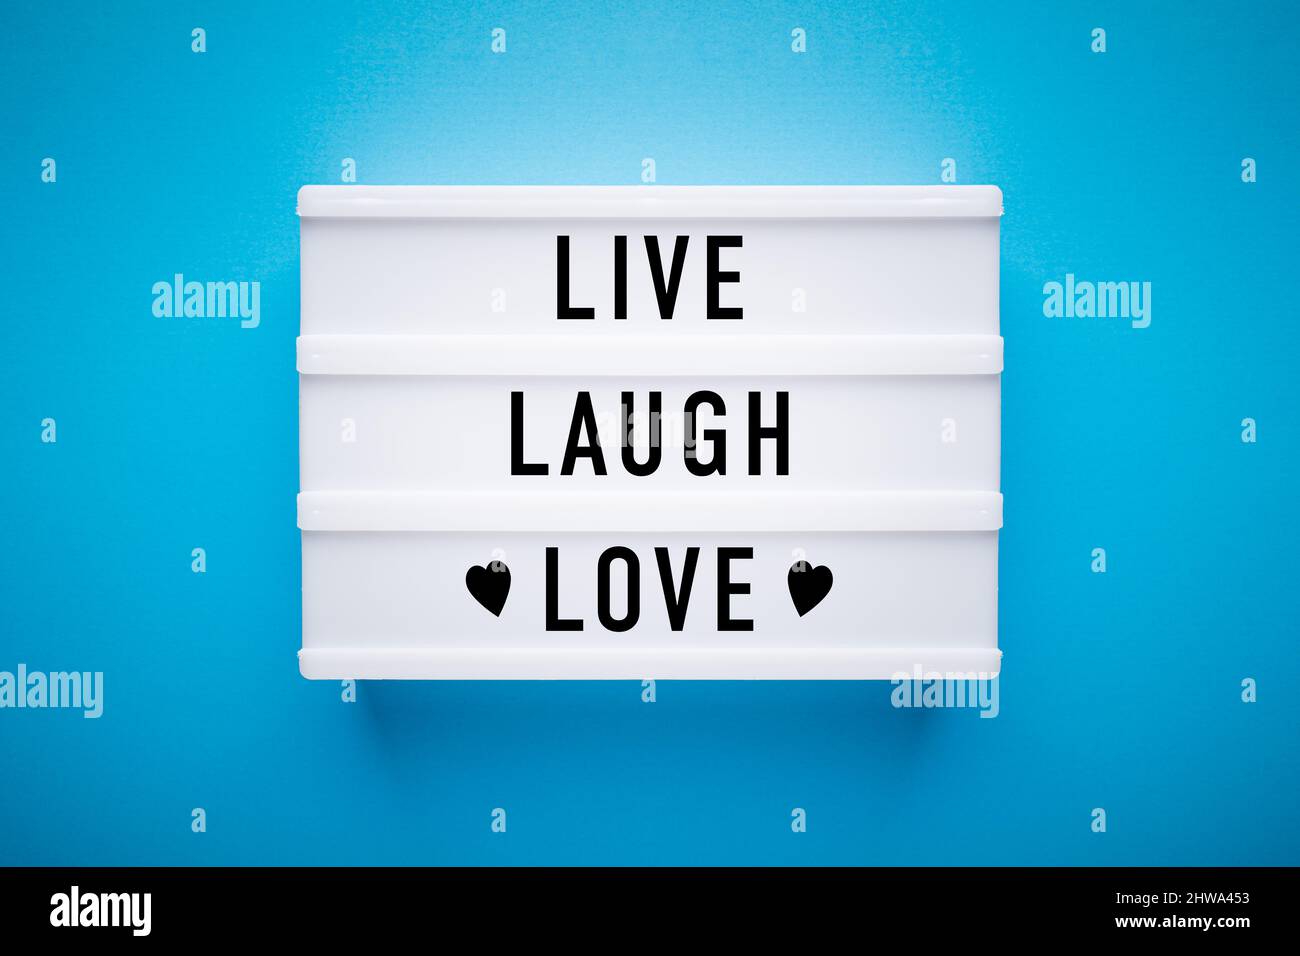 Caja de luz sobre un fondo azul claro con mensaje en él: Vivir, reír, amar. Foto de stock